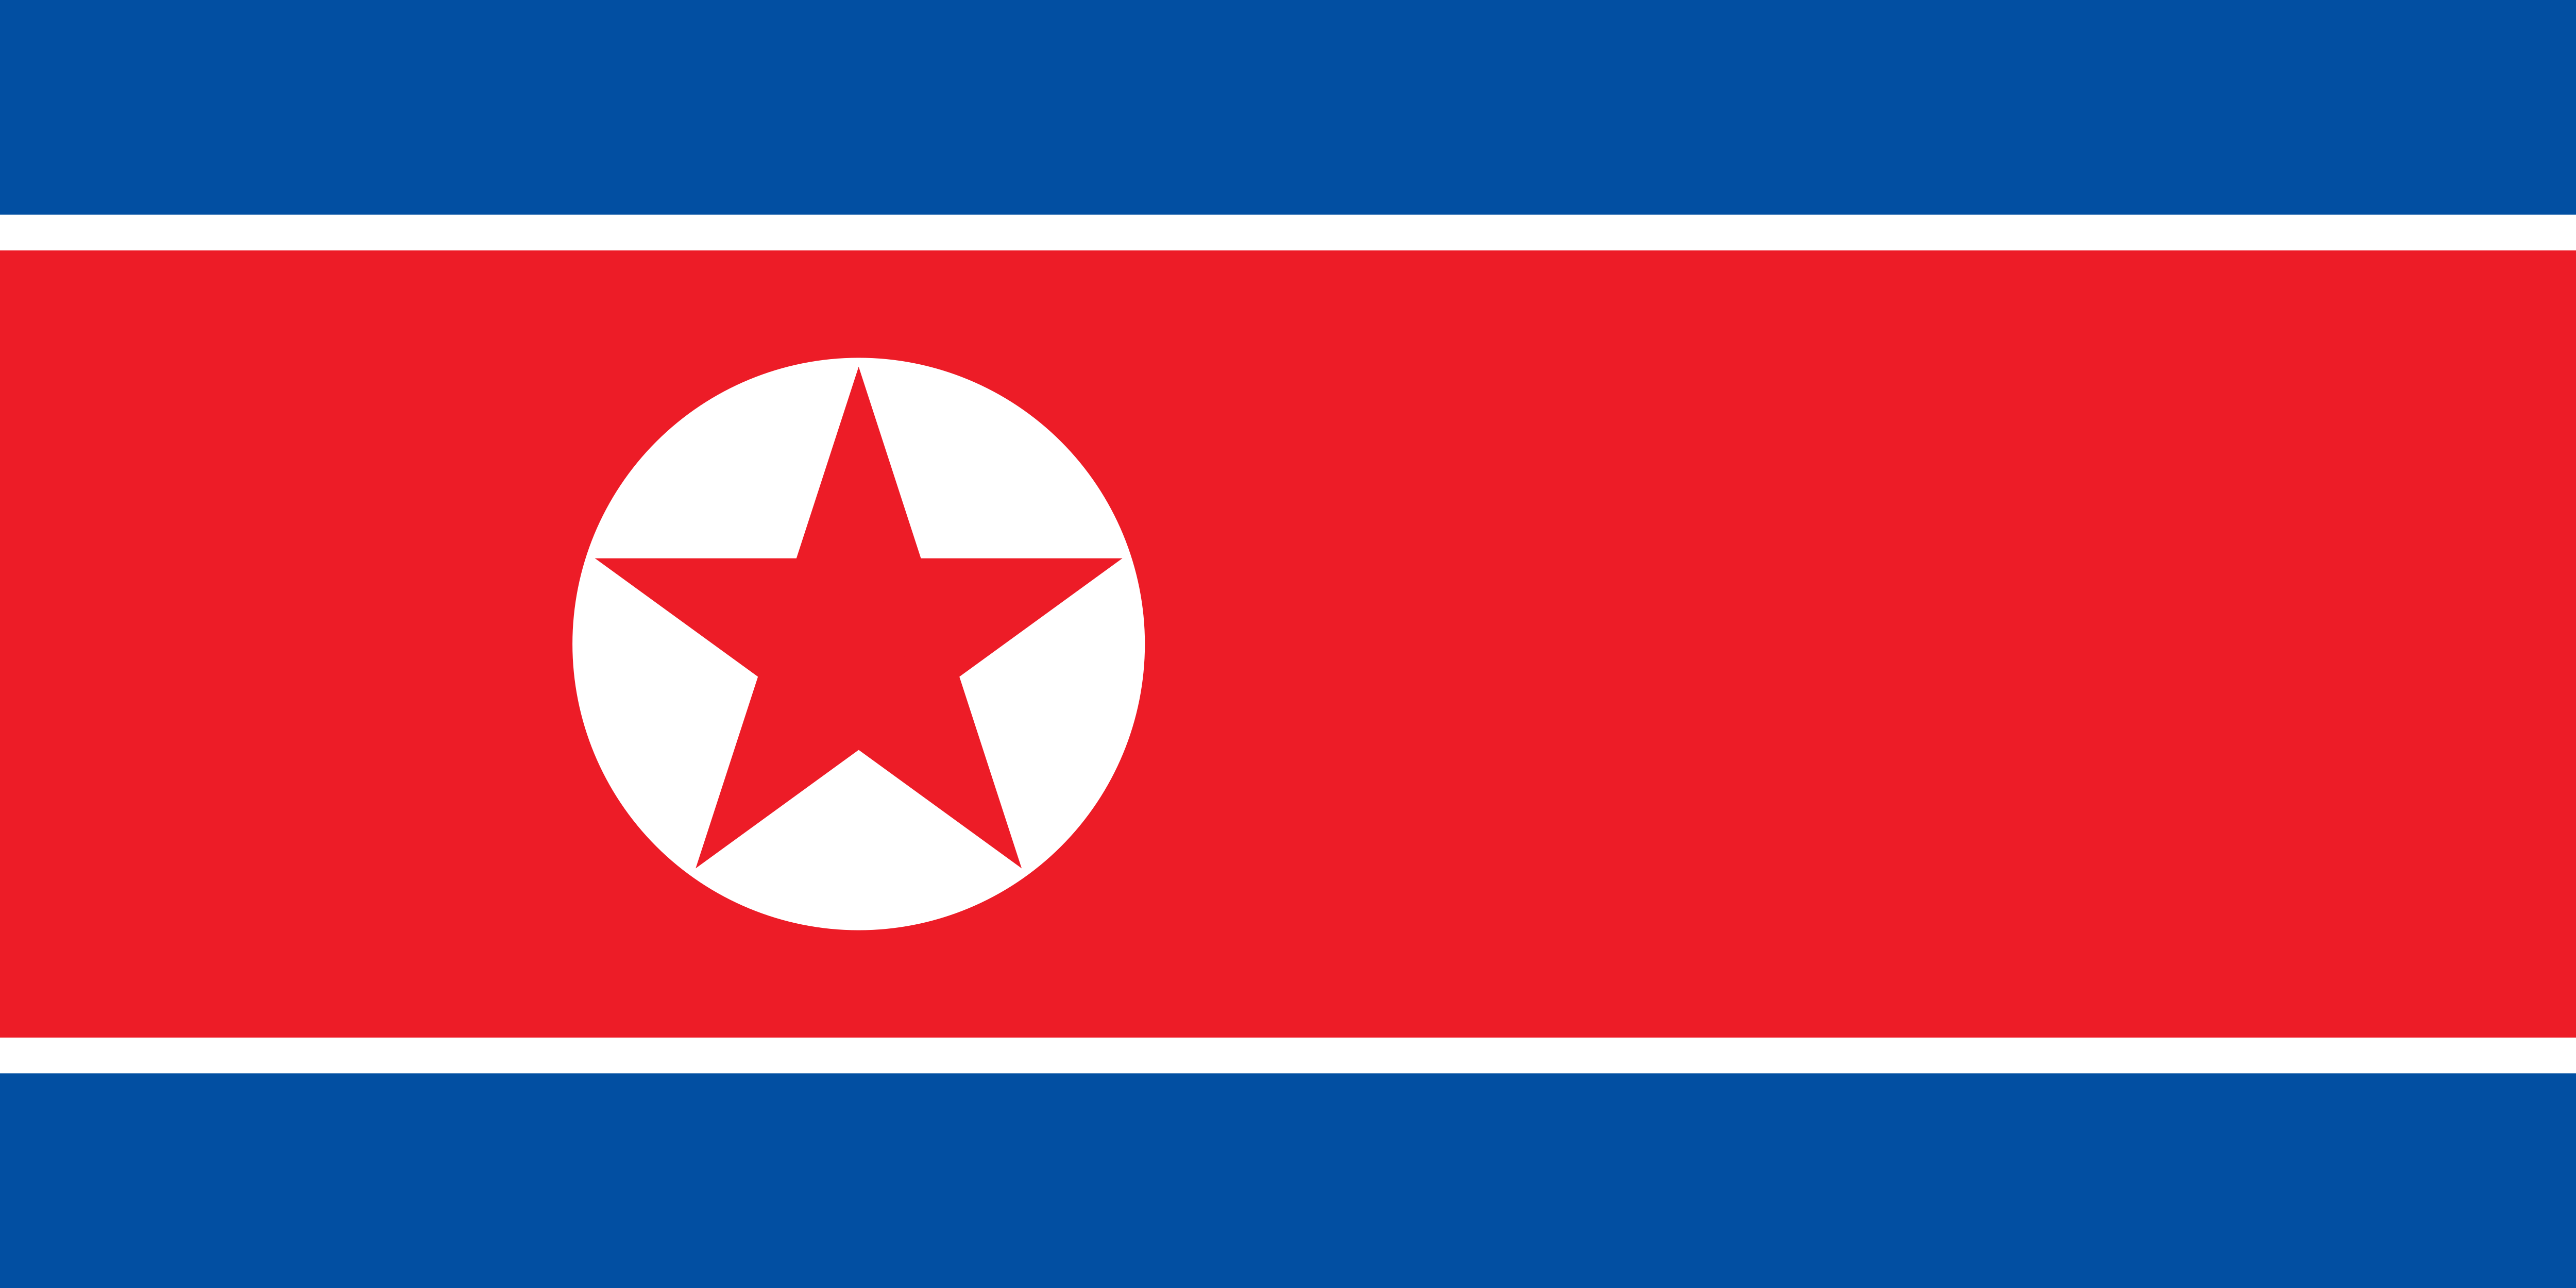 North Korea Flag Image - Free Download